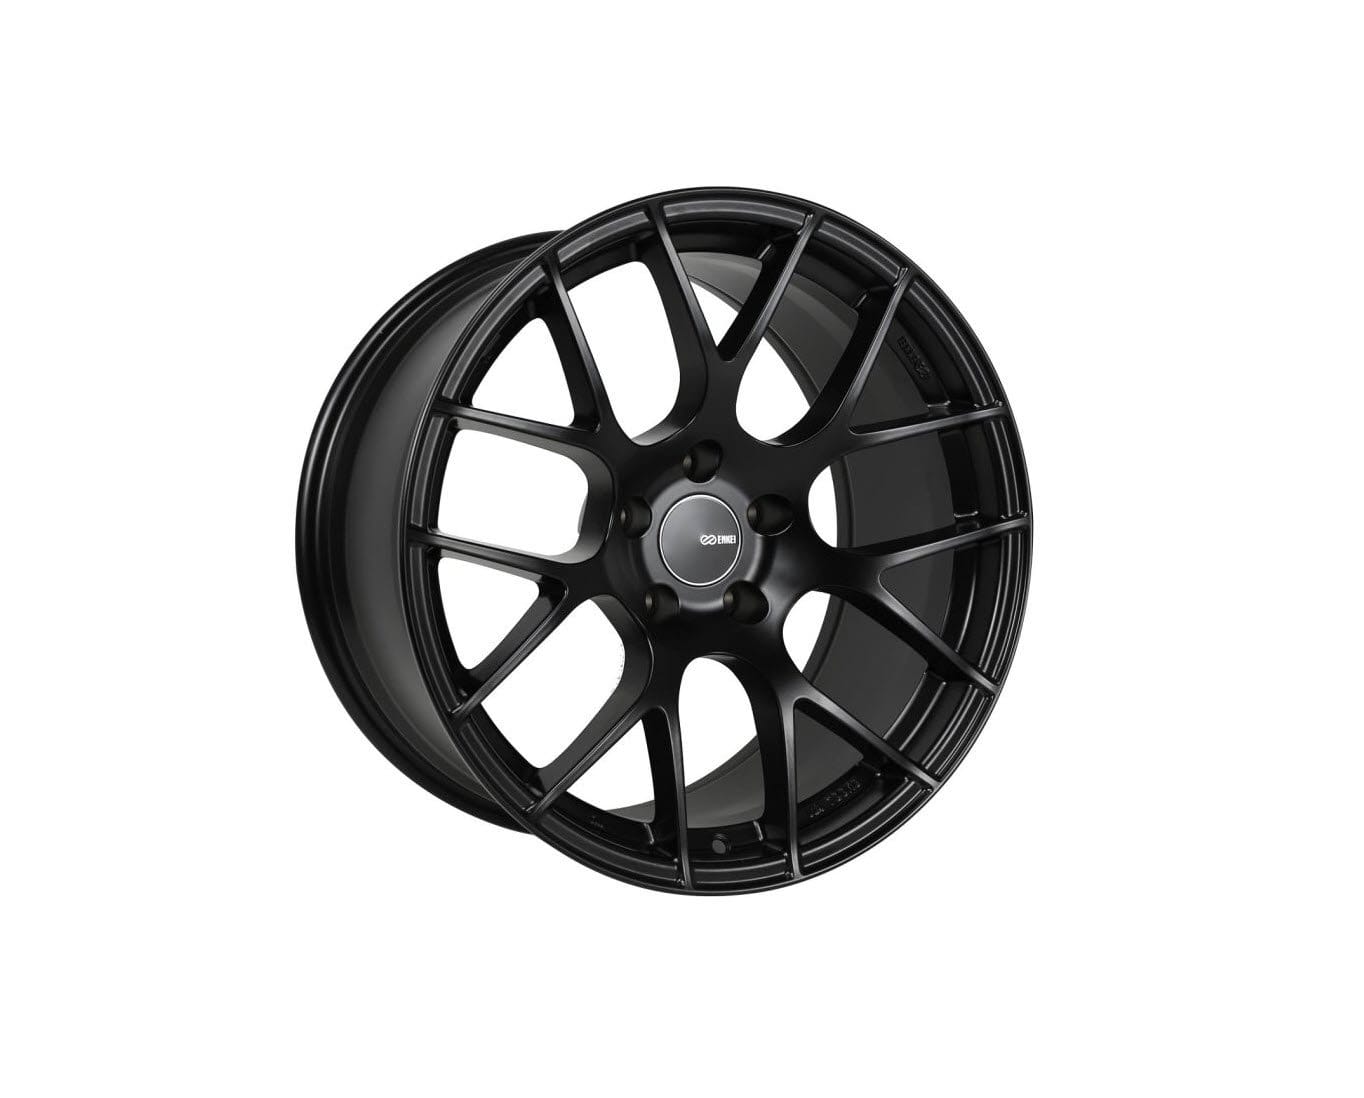 Enkei Raijin 18x8.5 5x114.3 50mm - Matte Black Wheel - Dirty Racing Products